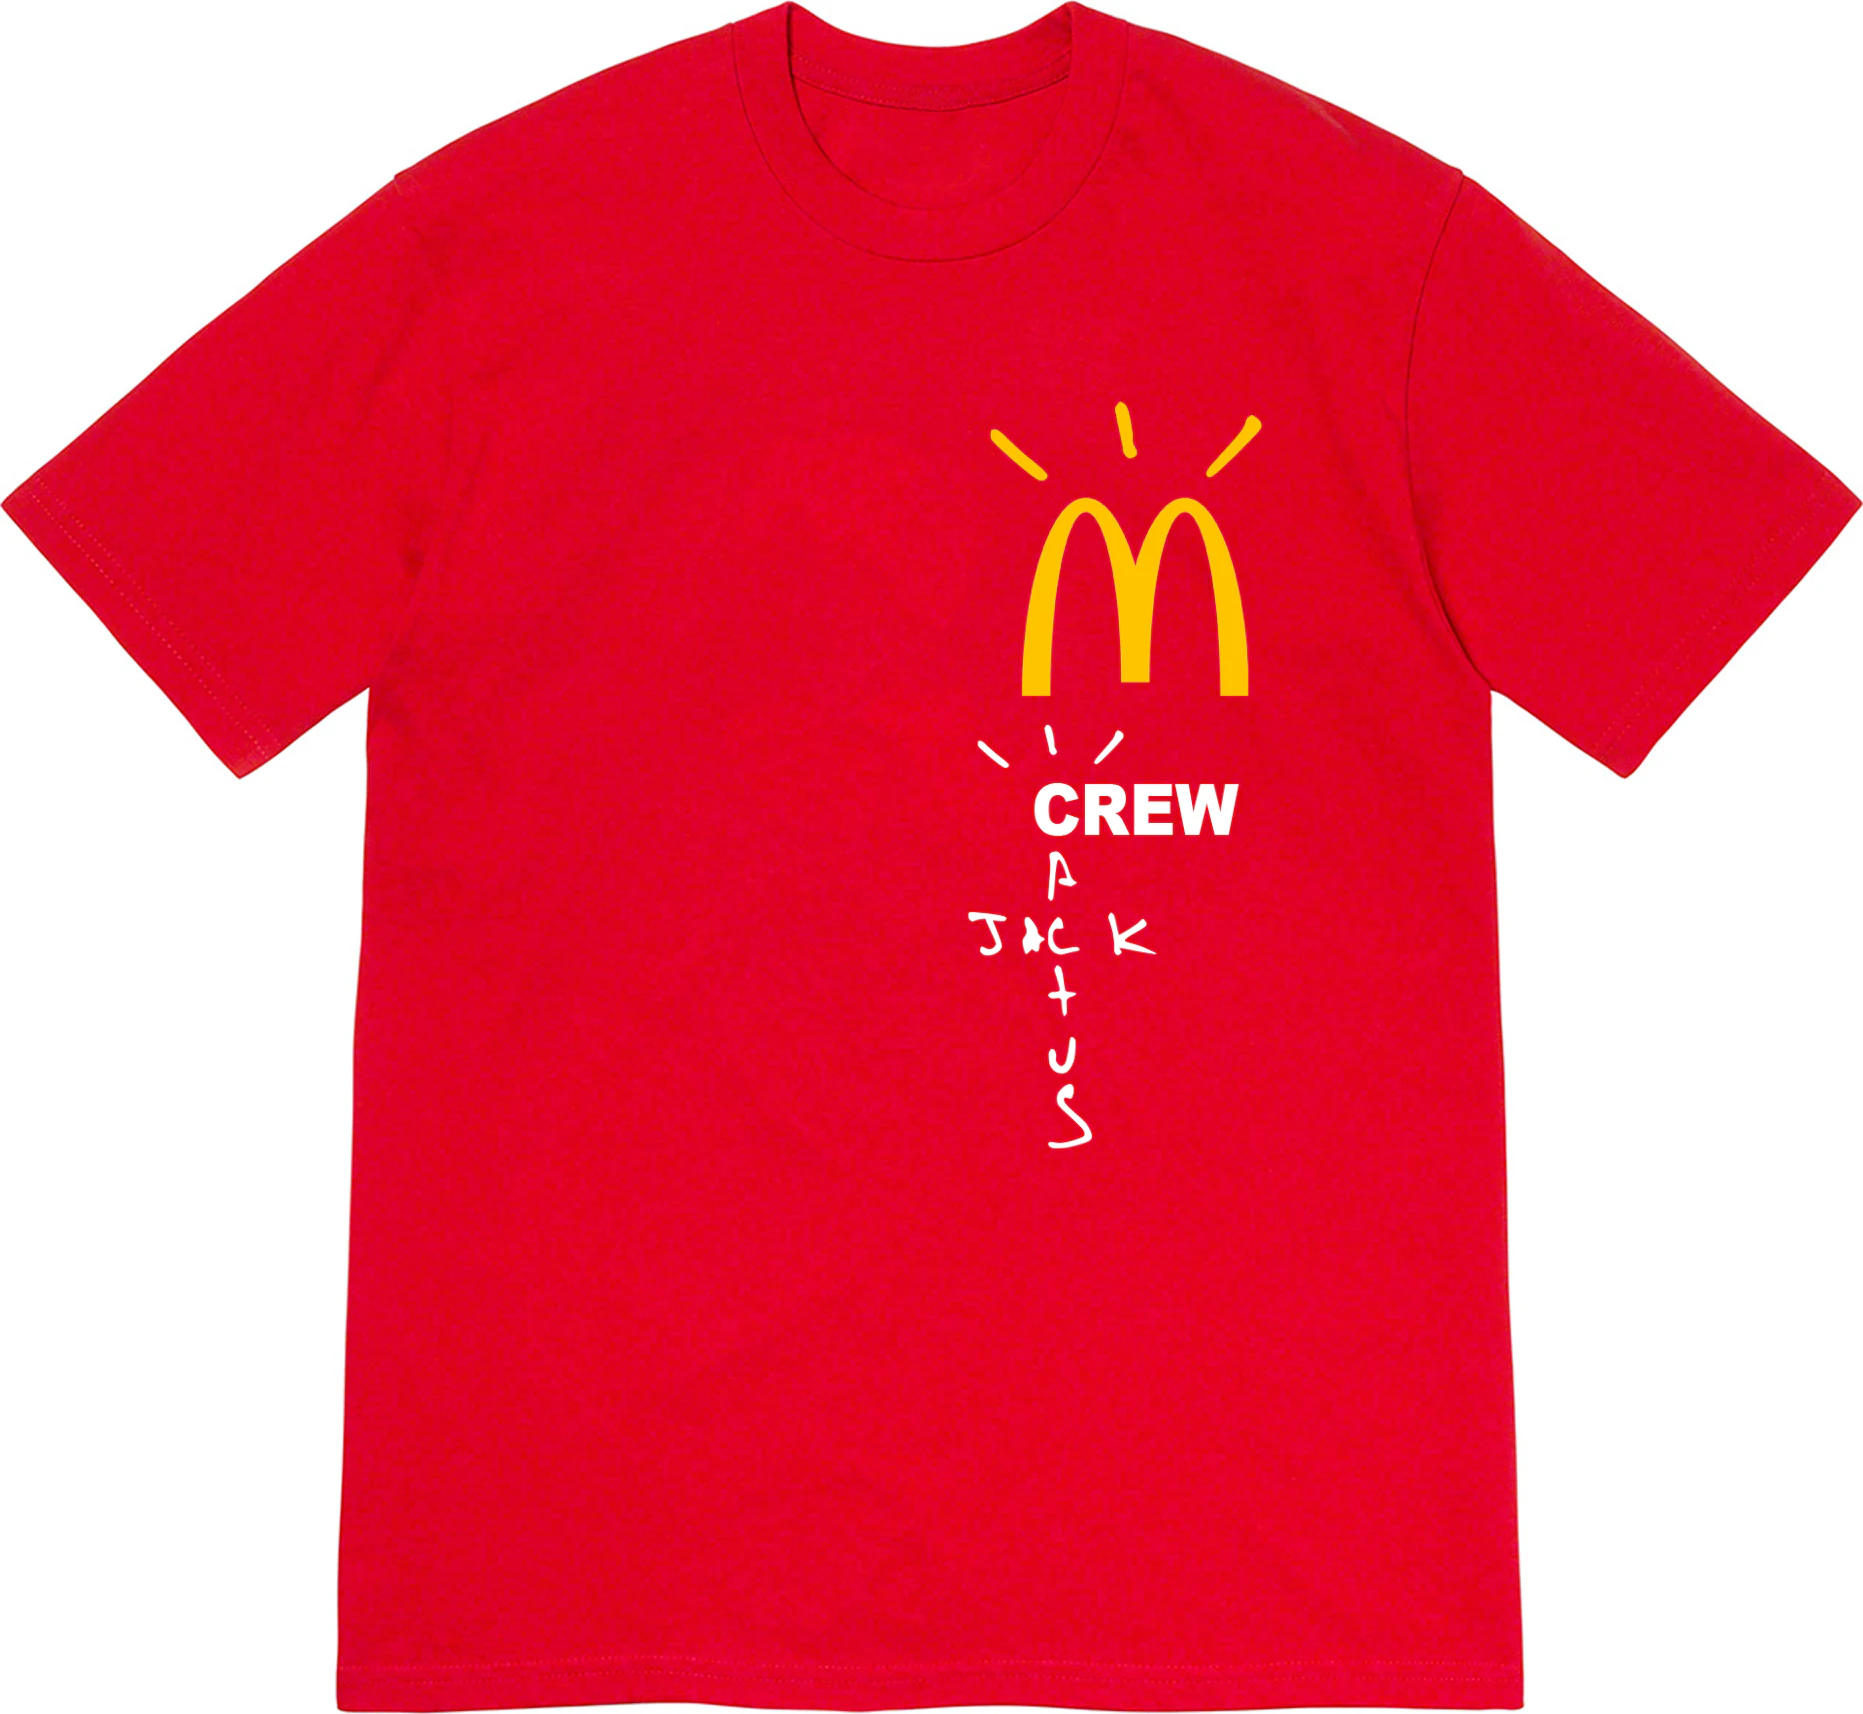 Scott x McDonald's Crew Red - FW20 - US